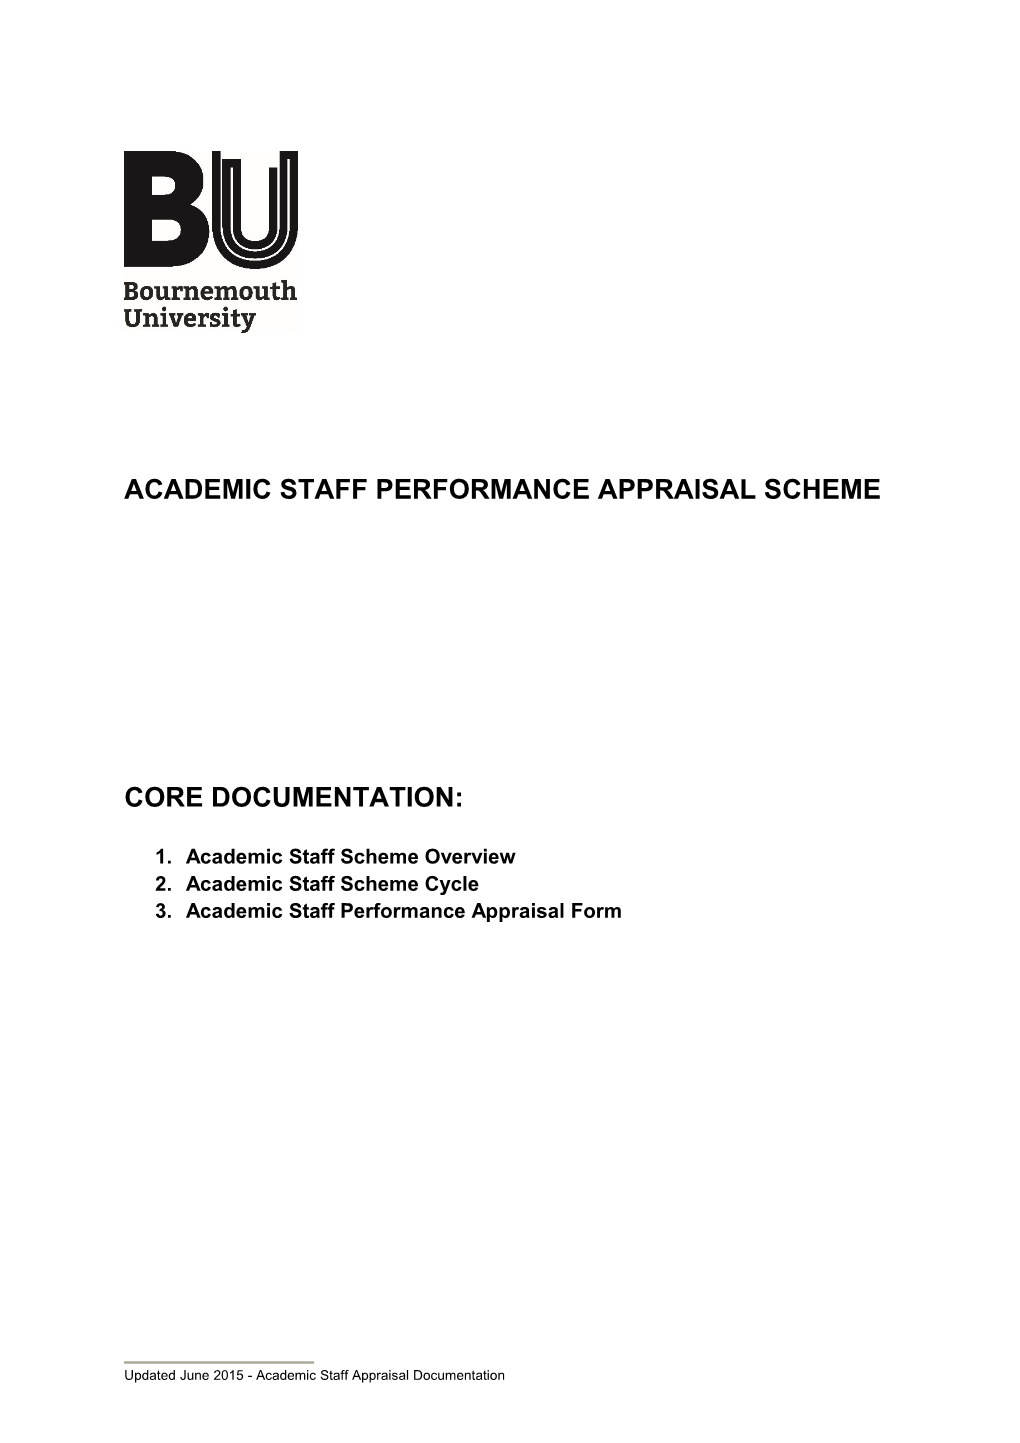 Academic Staff Core Documentation May 2014